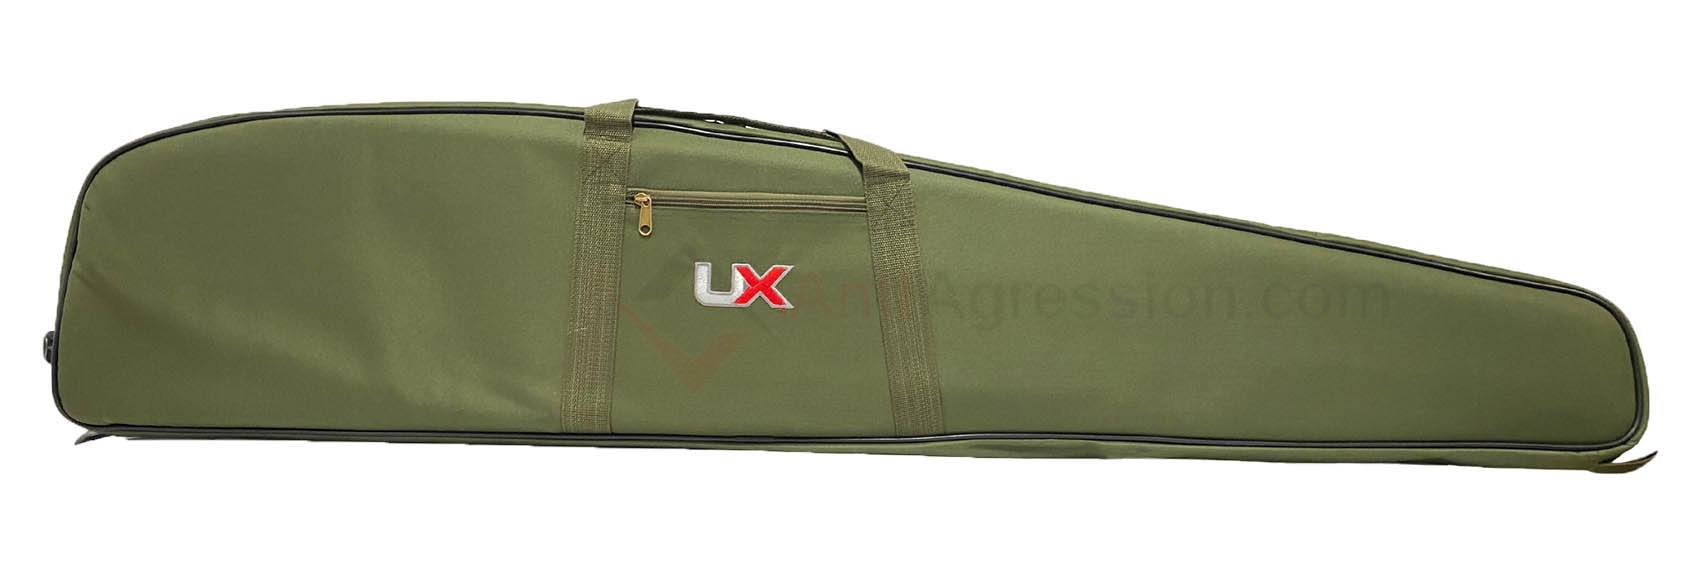 Fourreau Umarex UX Kaki pour carabines